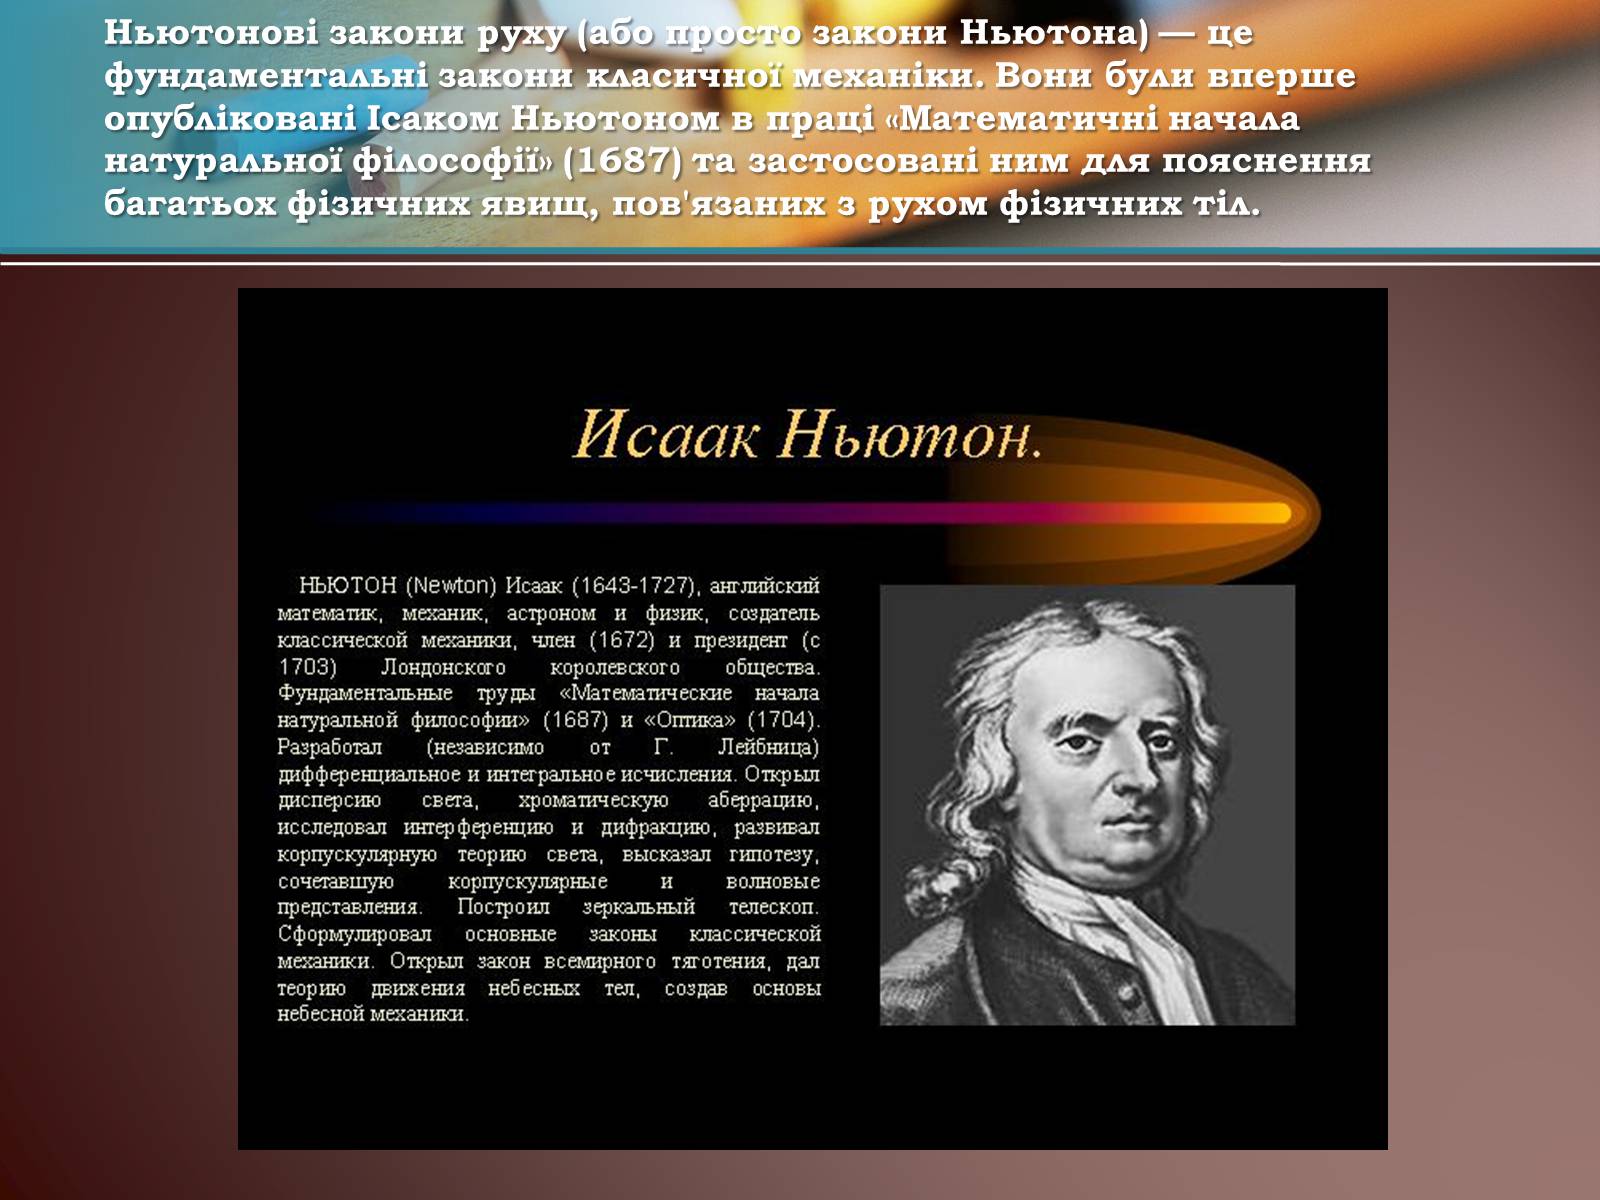 1643 Исаак Ньютон, английский астроном, физик, математик